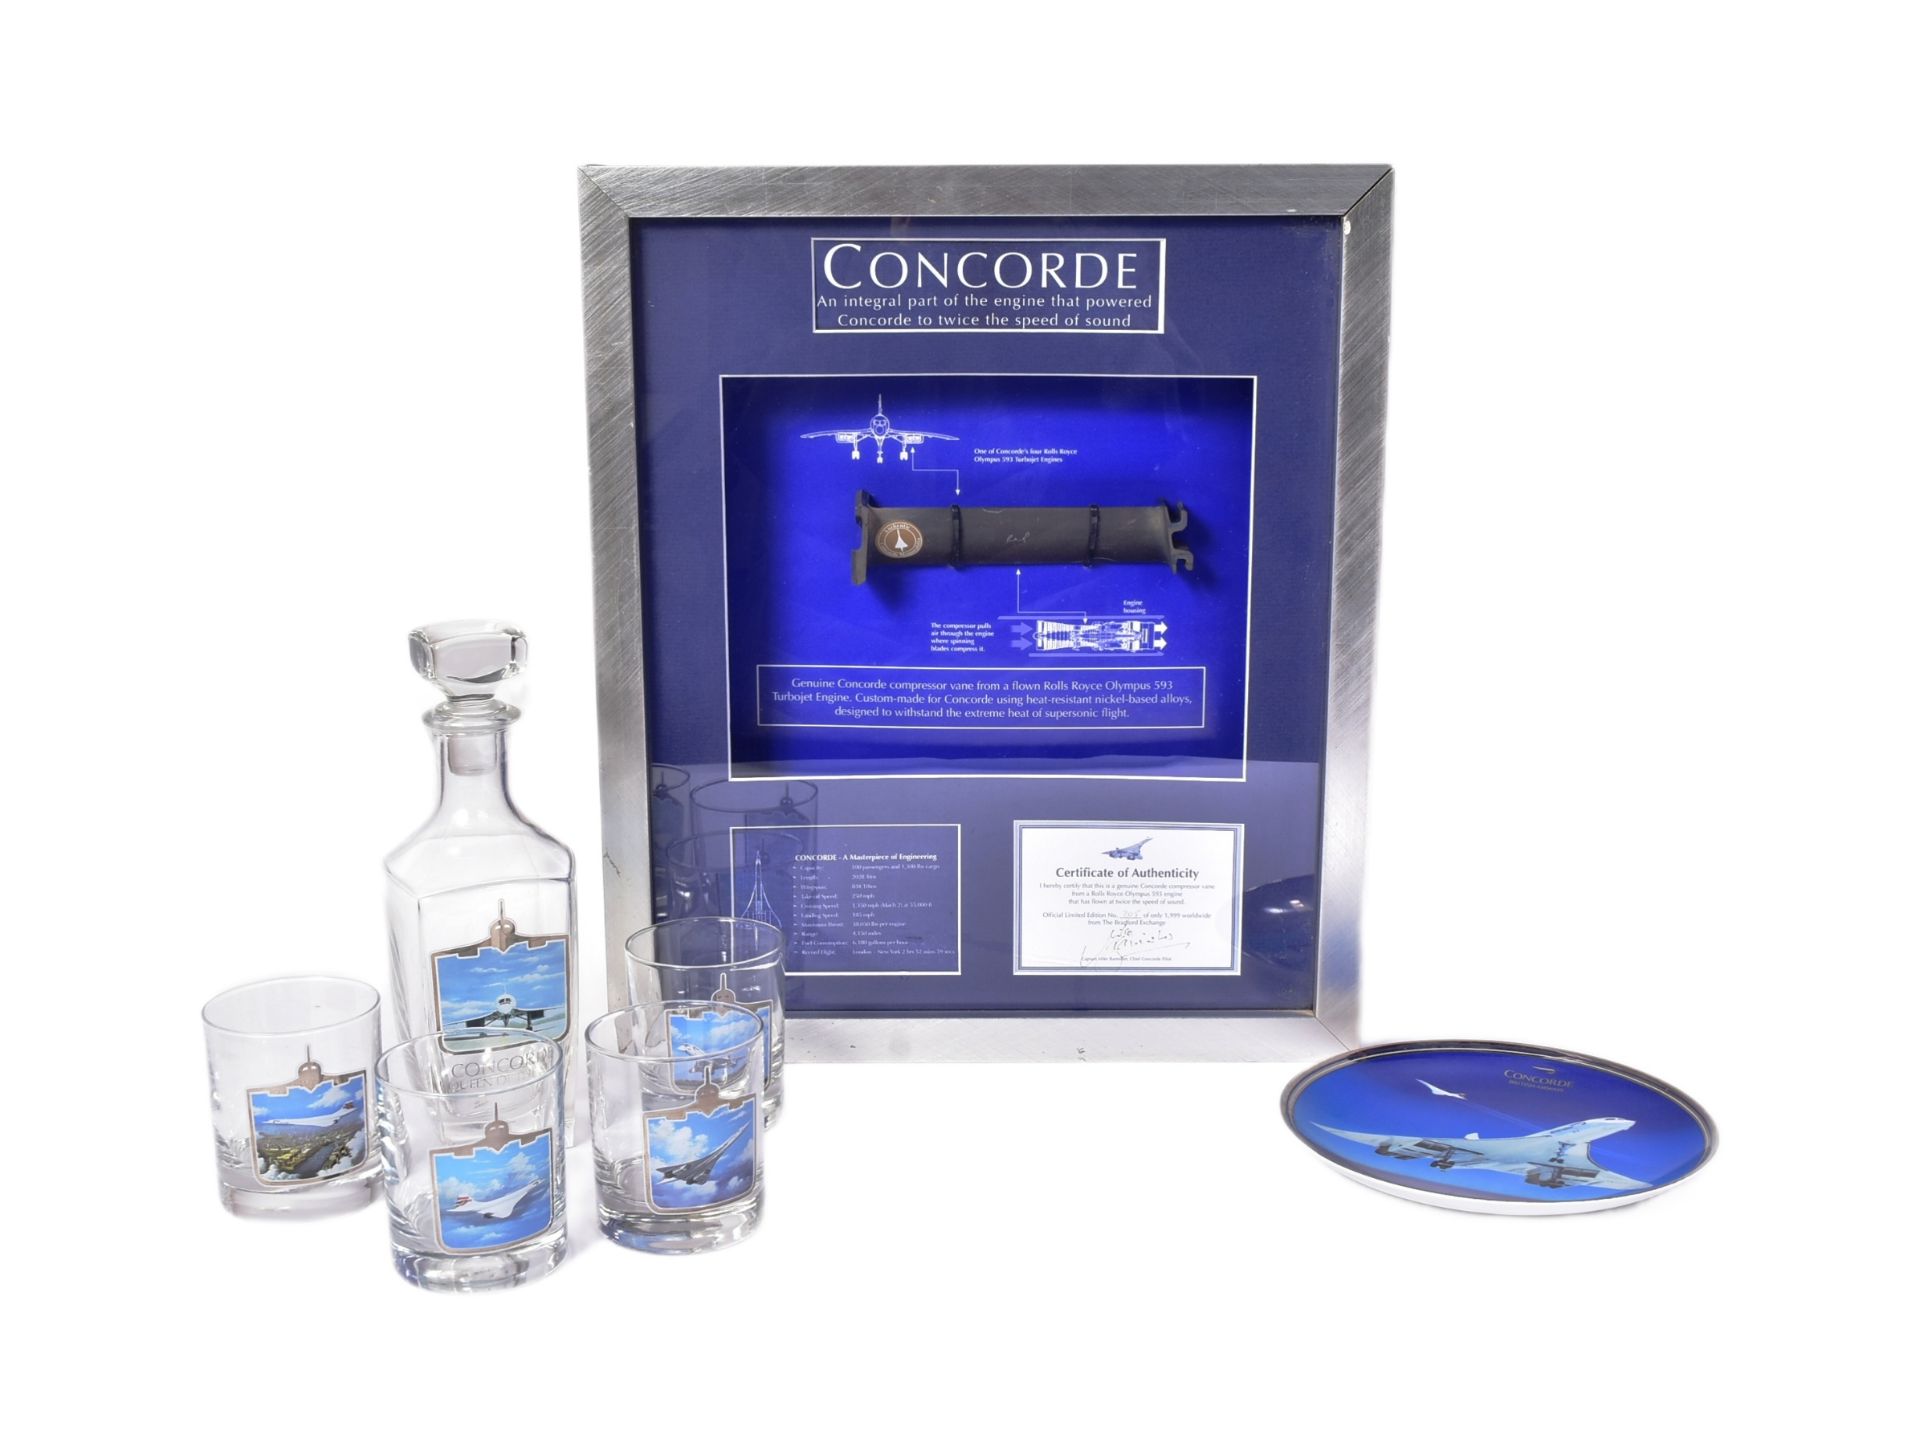 CONCORDE - GENUINE COMPRESSOR VANE & GLASS DECANTER SET